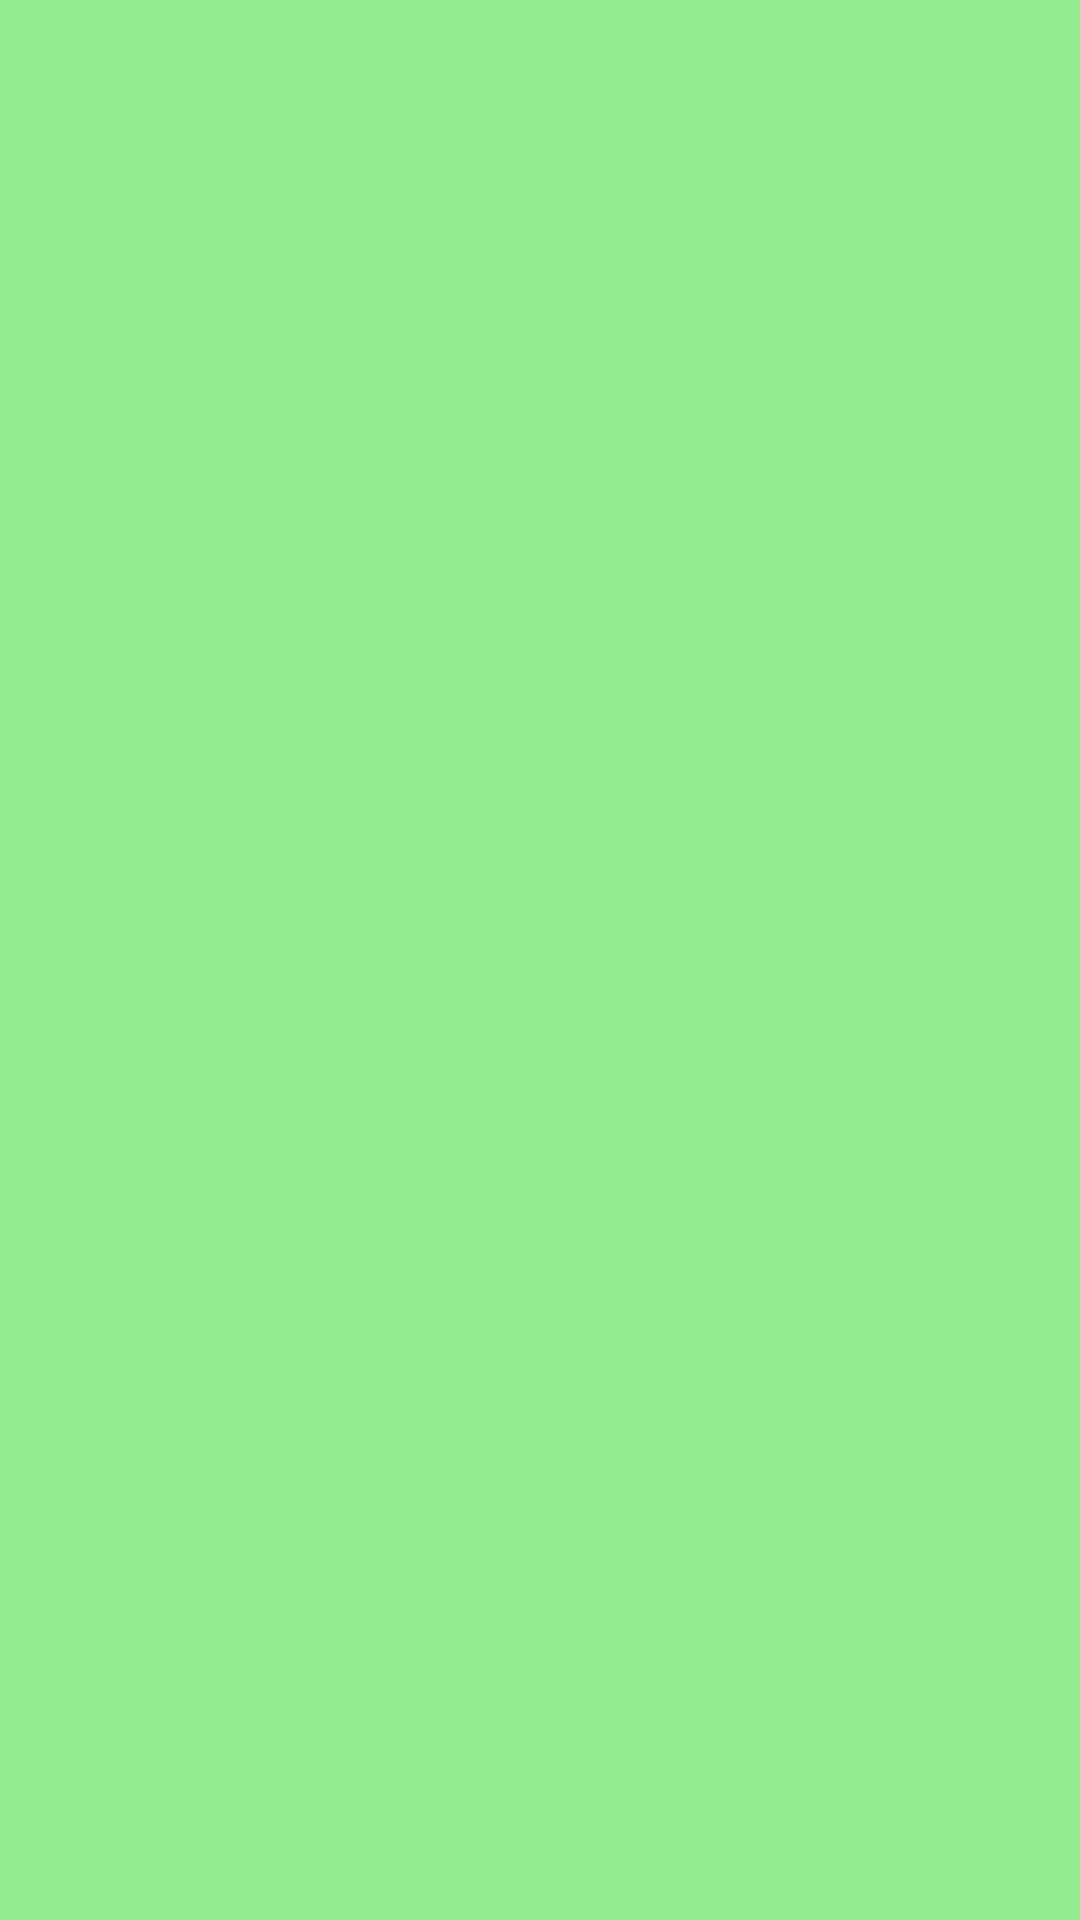 Light Green Plain Solid Color